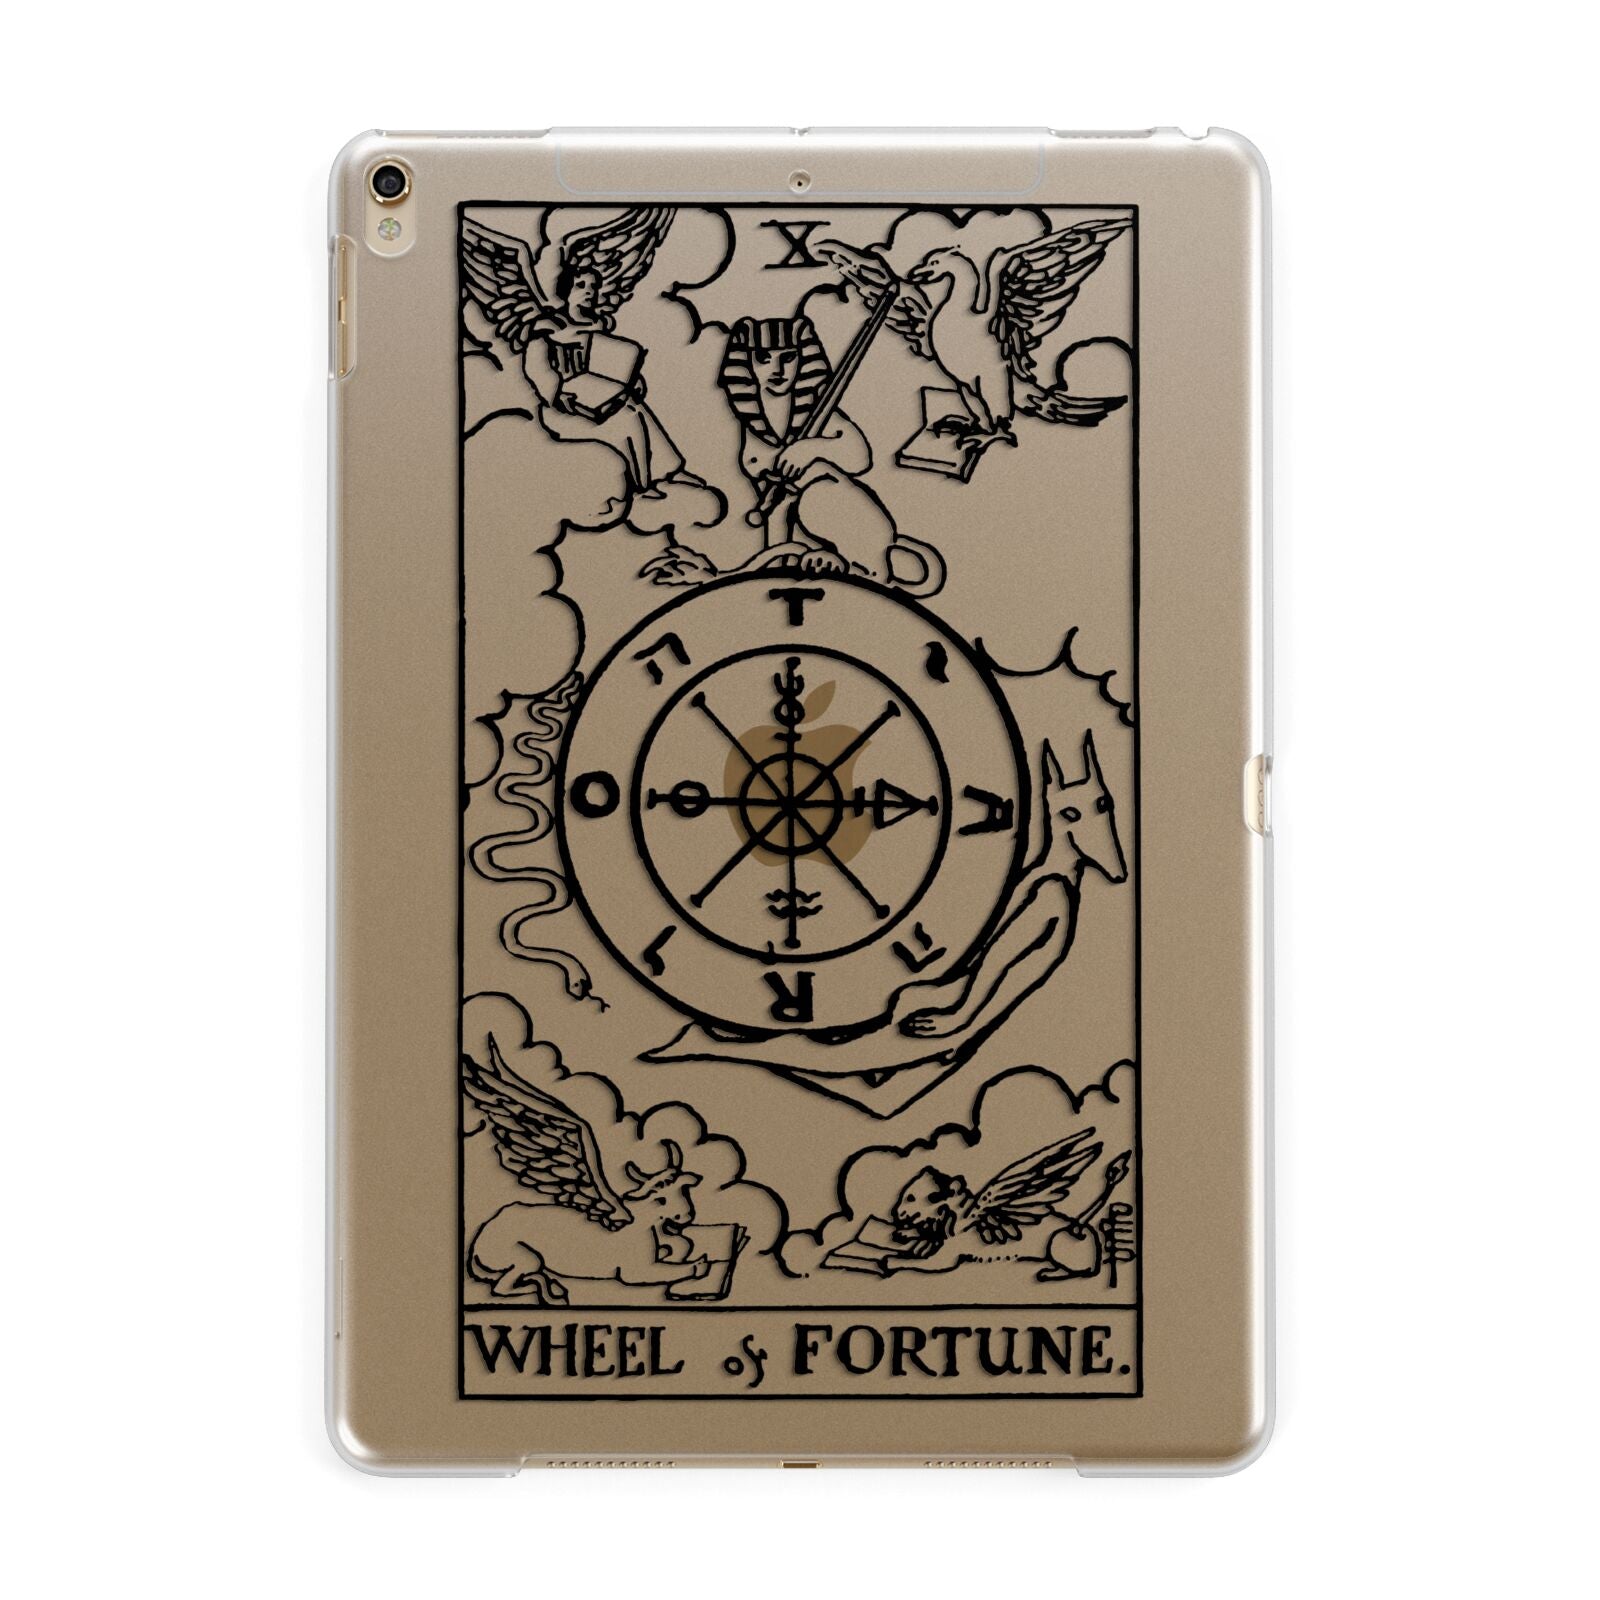 Wheel of Fortune Monochrome Tarot Card Apple iPad Gold Case